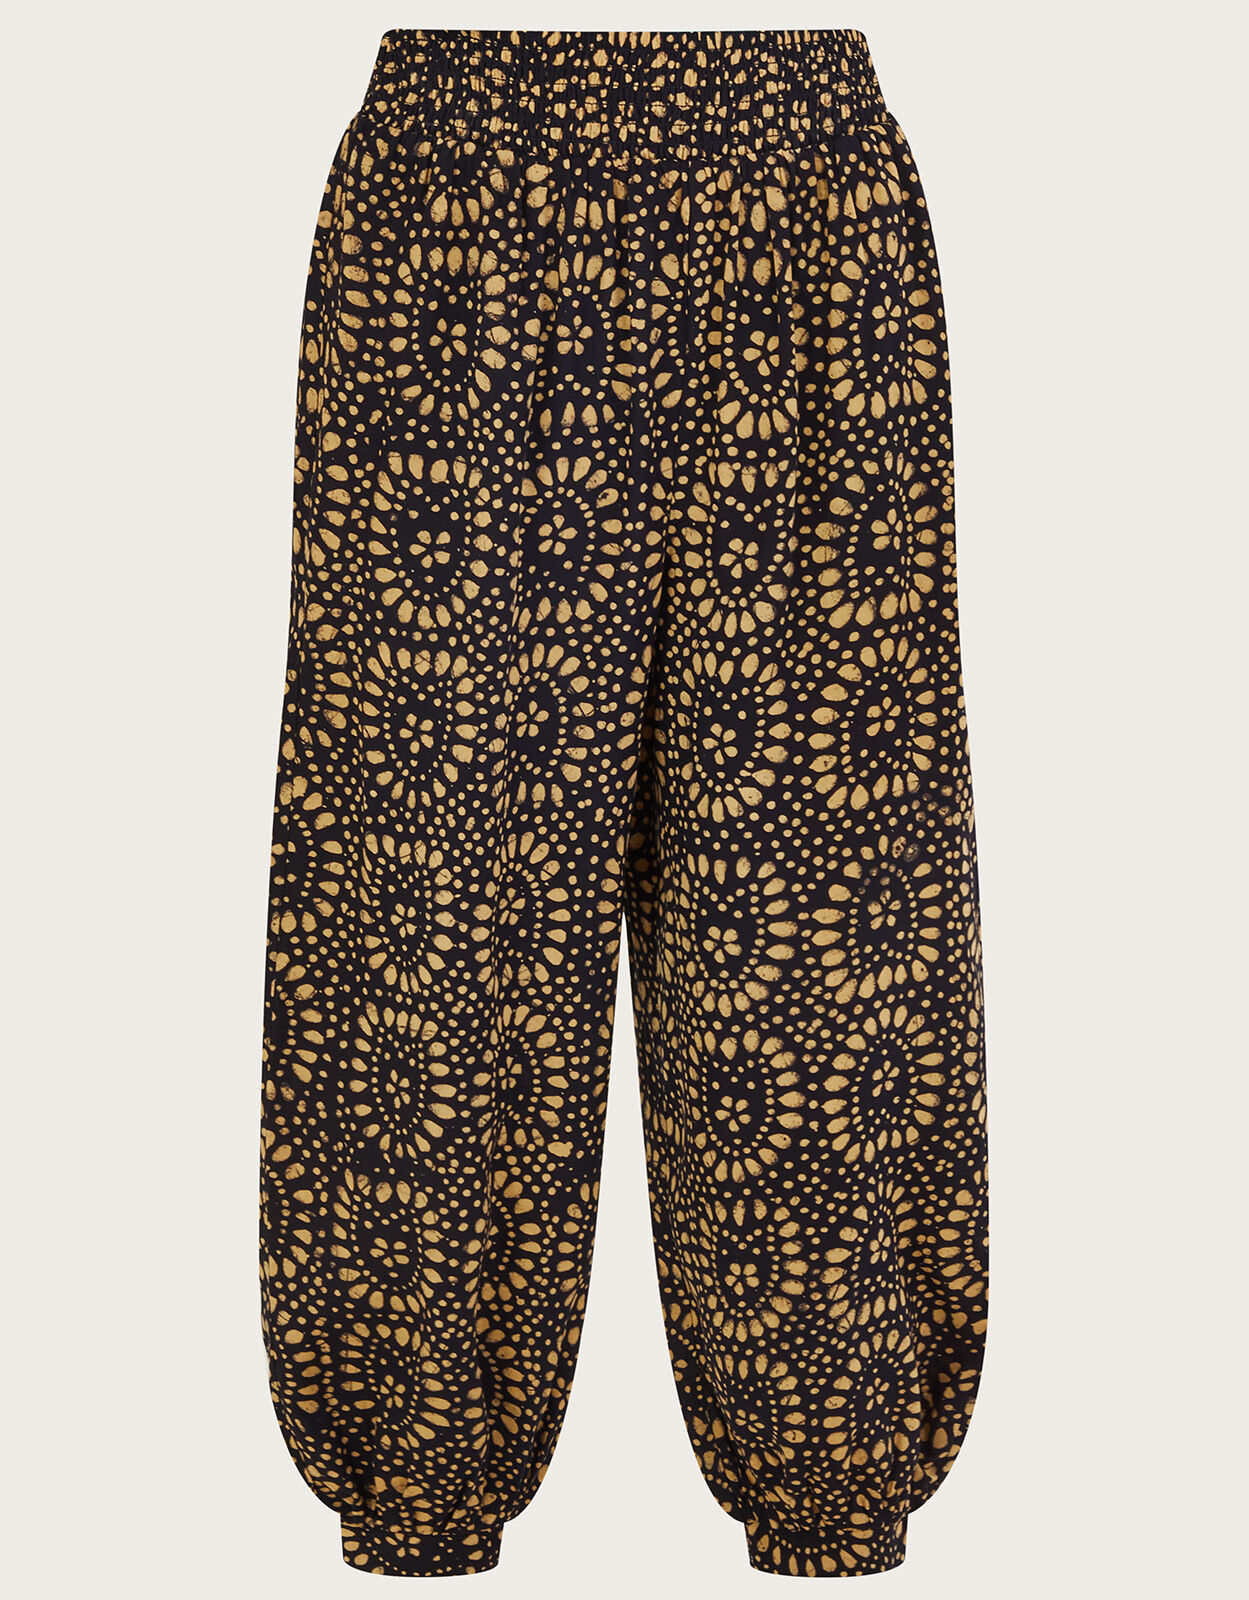 INCERUN Men Summer Printed Harem Pants Casual Baggy Drop Crotch Trousers  S-5XL | eBay